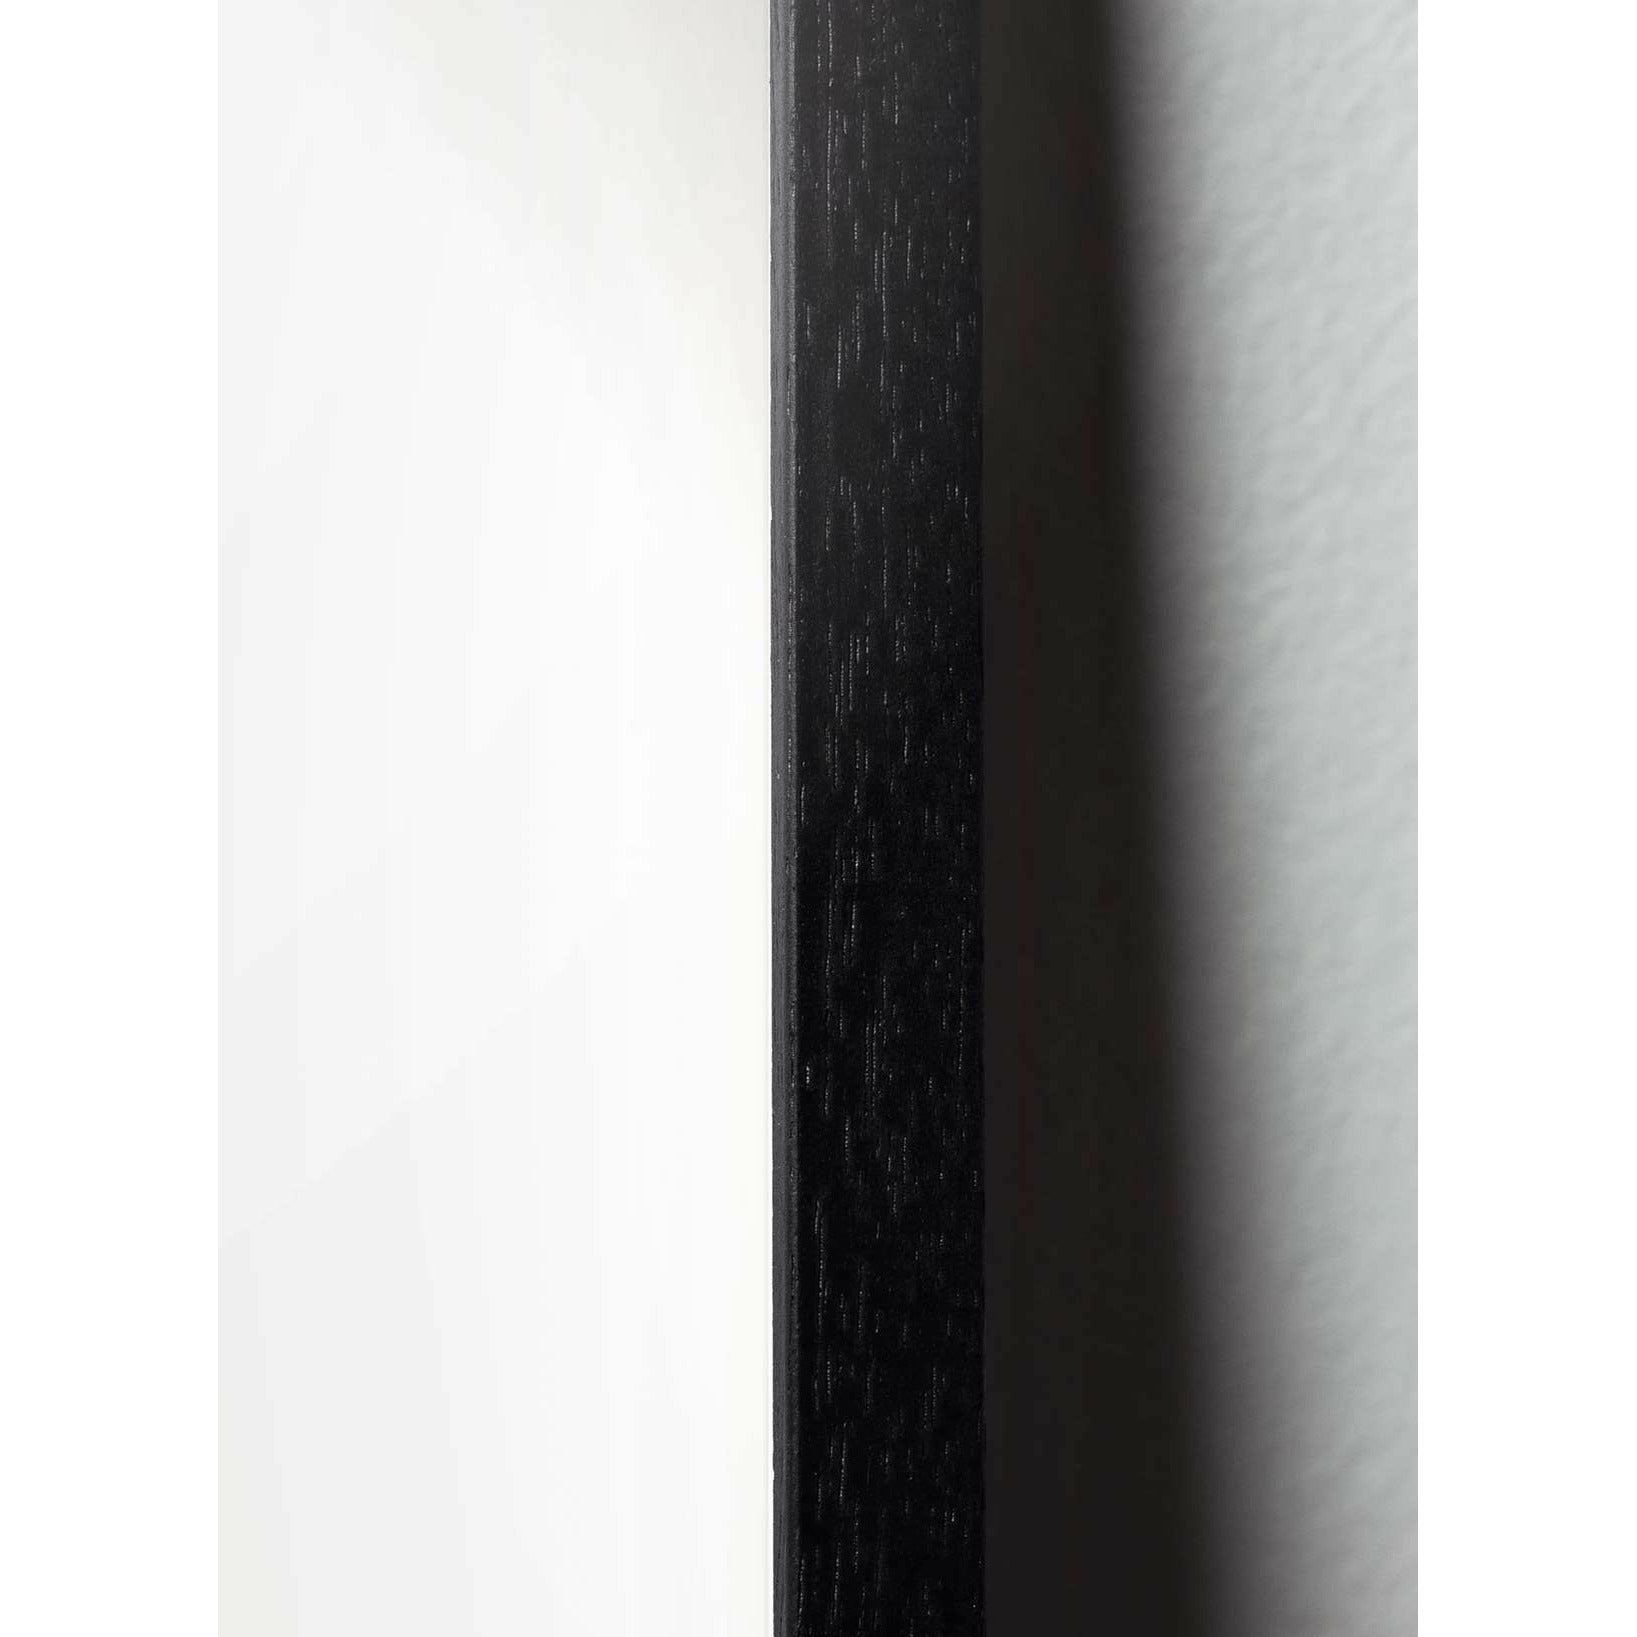 Brainchild Släpp klassisk affisch, ram i svart -målat trä 70x100 cm, svart bakgrund